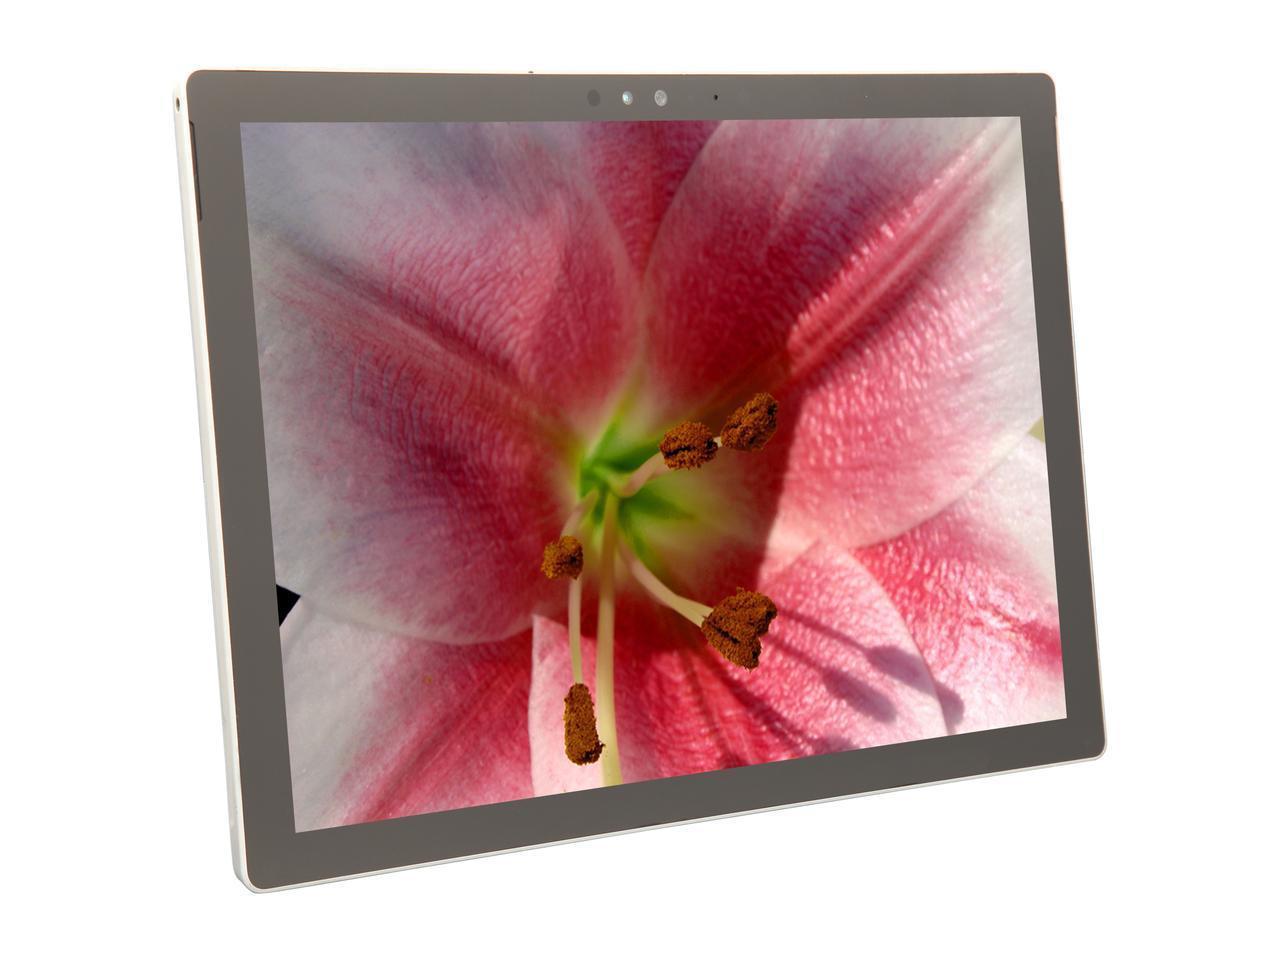 Refurbished: Microsoft Surface Pro 4 1724 Tablet - 6th Gen Intel Core